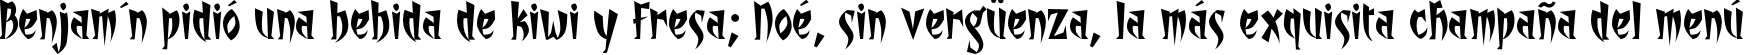 Пример написания шрифтом Stiltskin текста на испанском